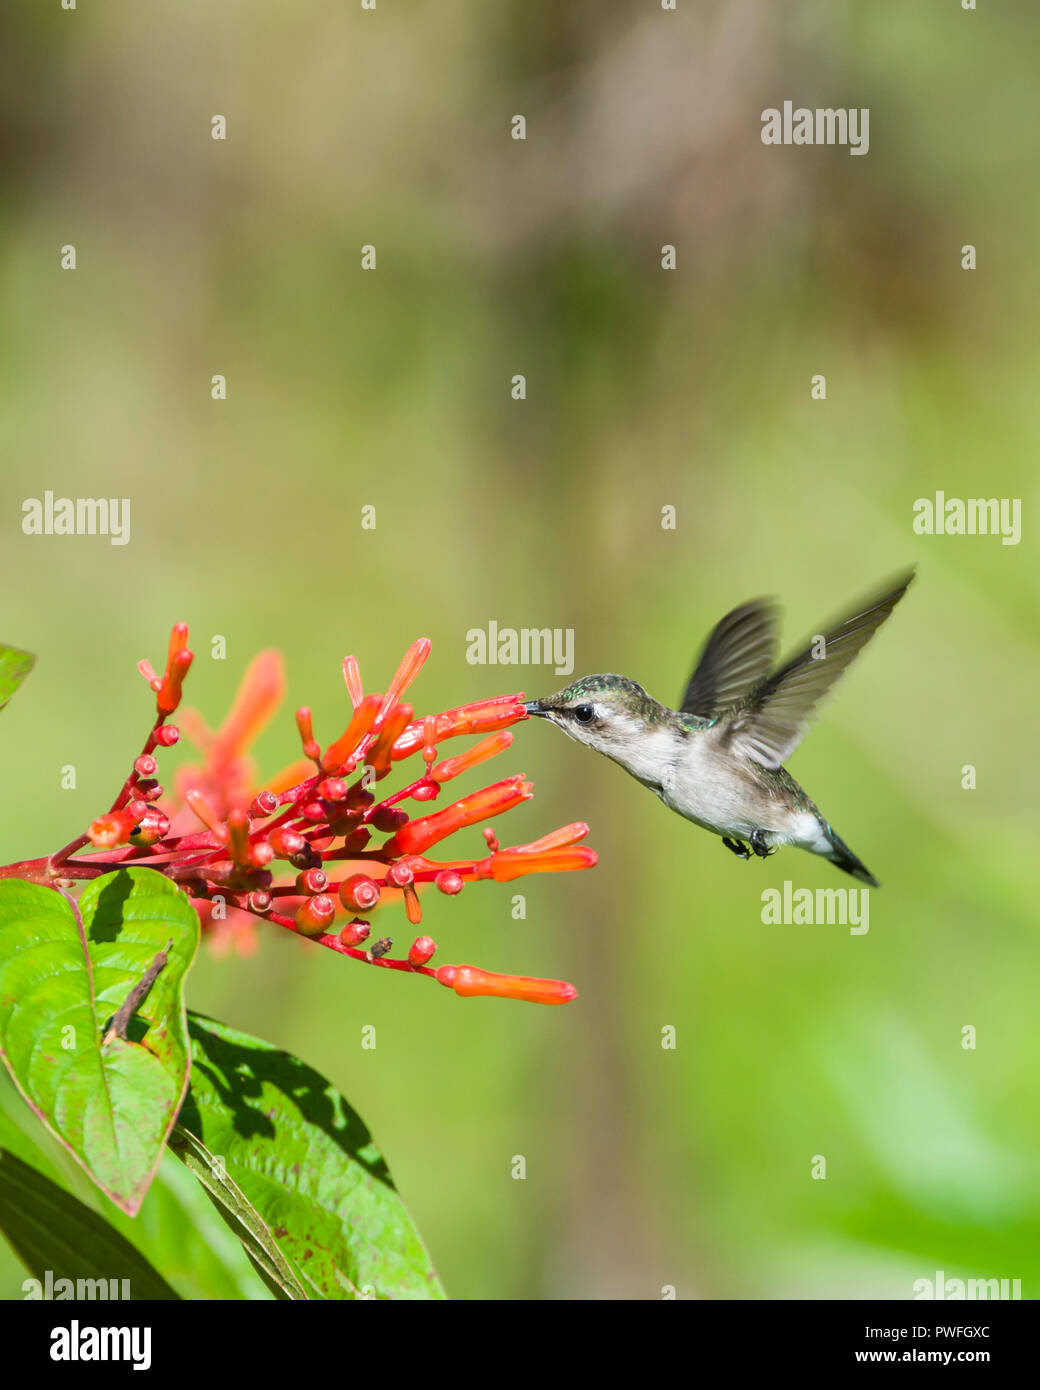 An endemic female Bee Hummingbird (Mellisuga helenae) in flight, visiting flowers of the Firebush tree (Hamelia patens). Cuba. Stock Photo